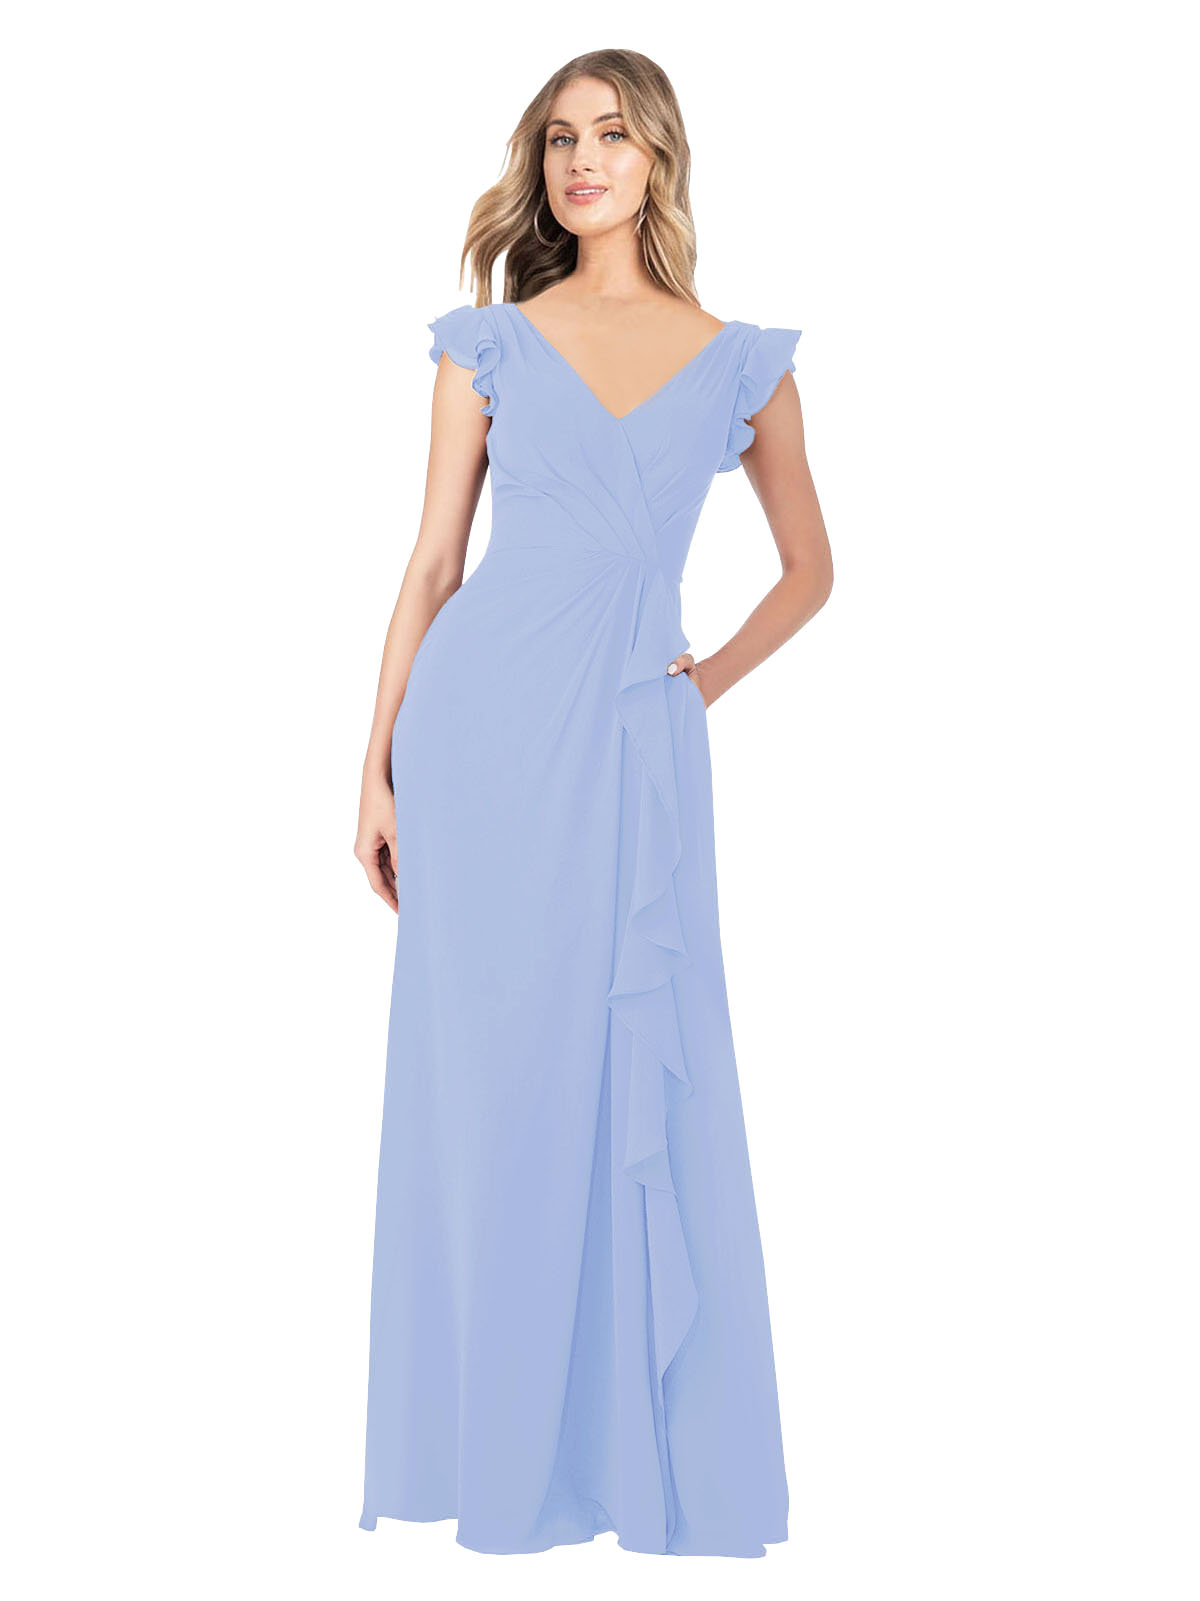 Lavender A-Line V-Neck Cap Sleeves Long Bridesmaid Dress Taryn